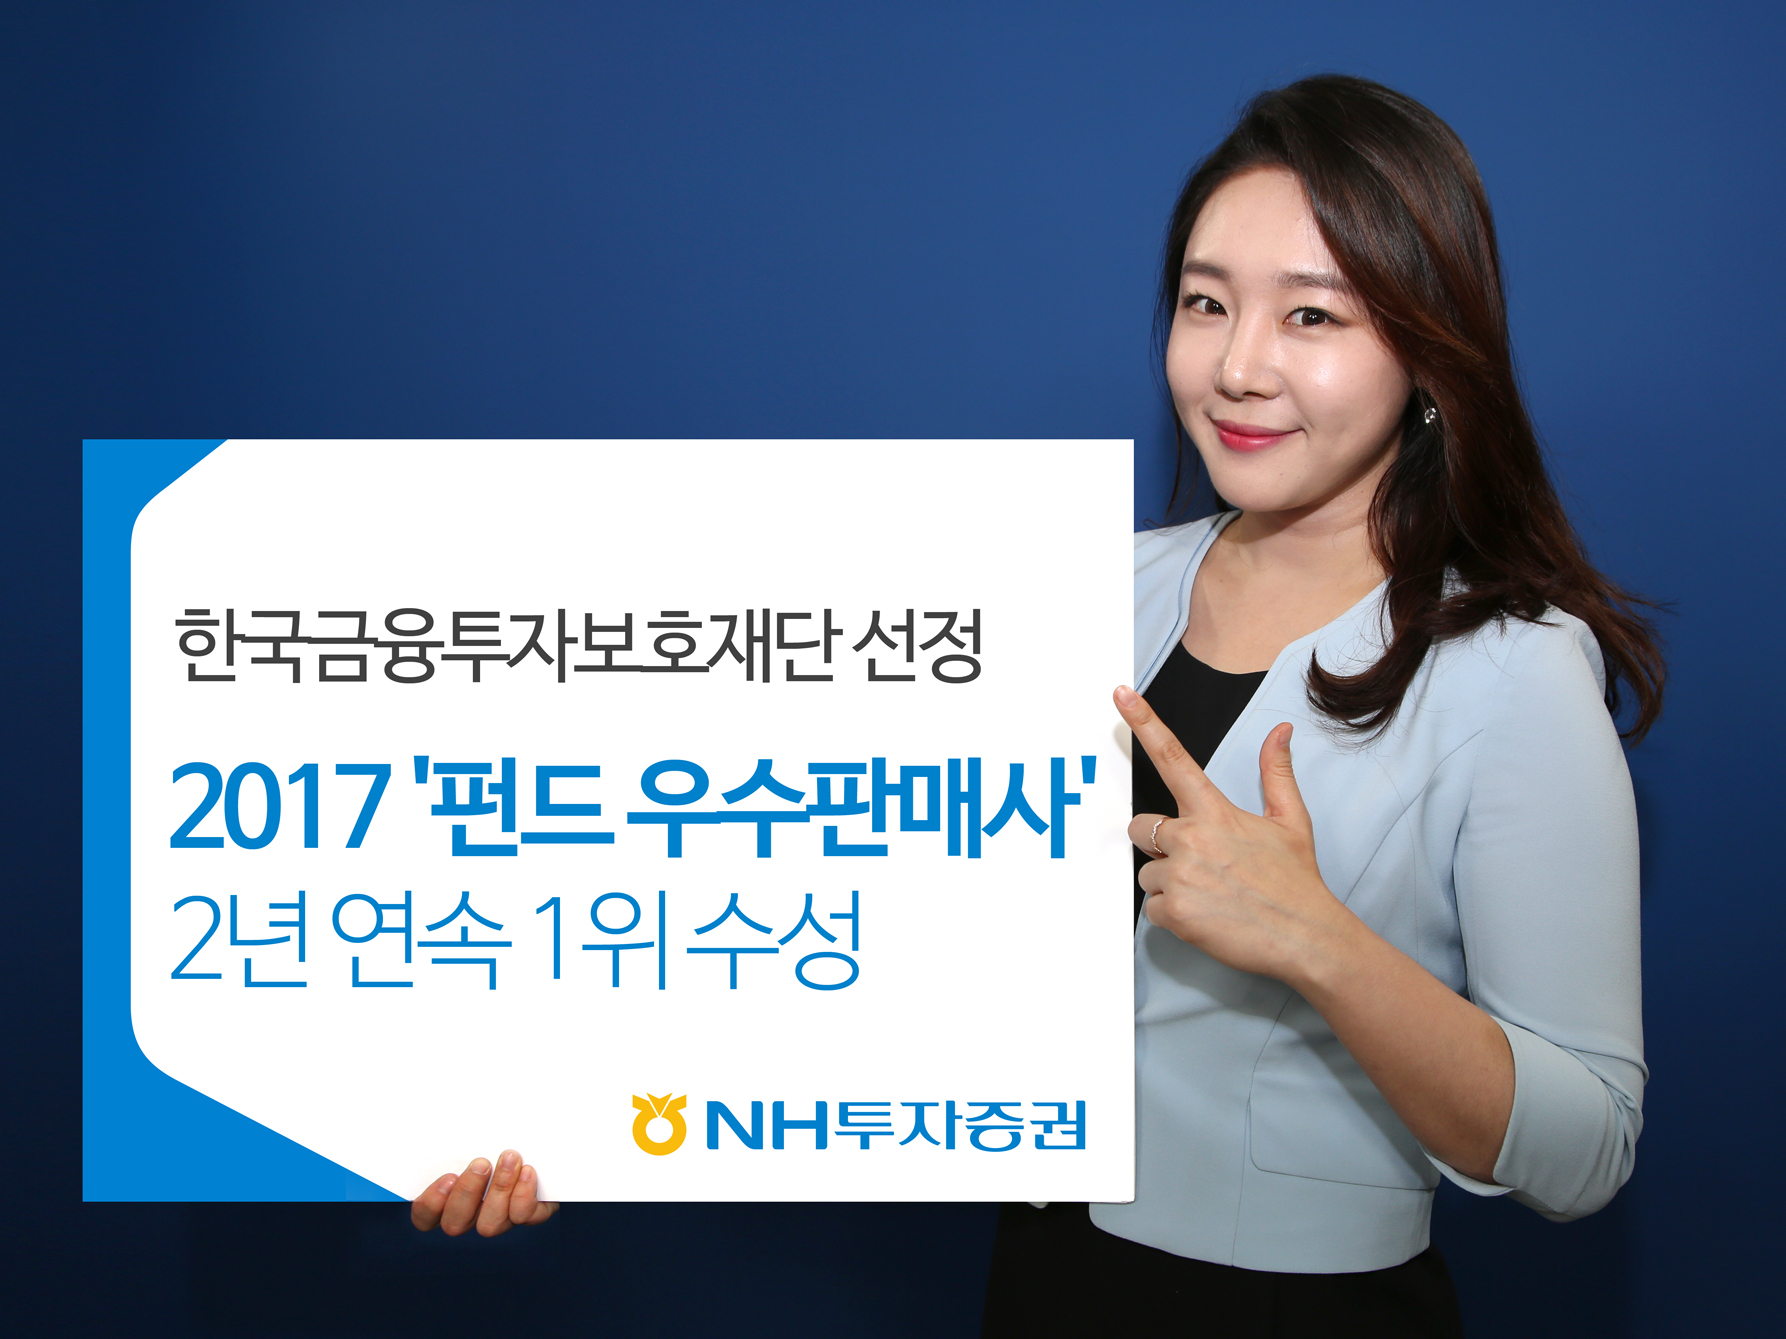 NH투자증권, 2017 ‘펀드 우수판매사’ 2년 연속 1위 수성